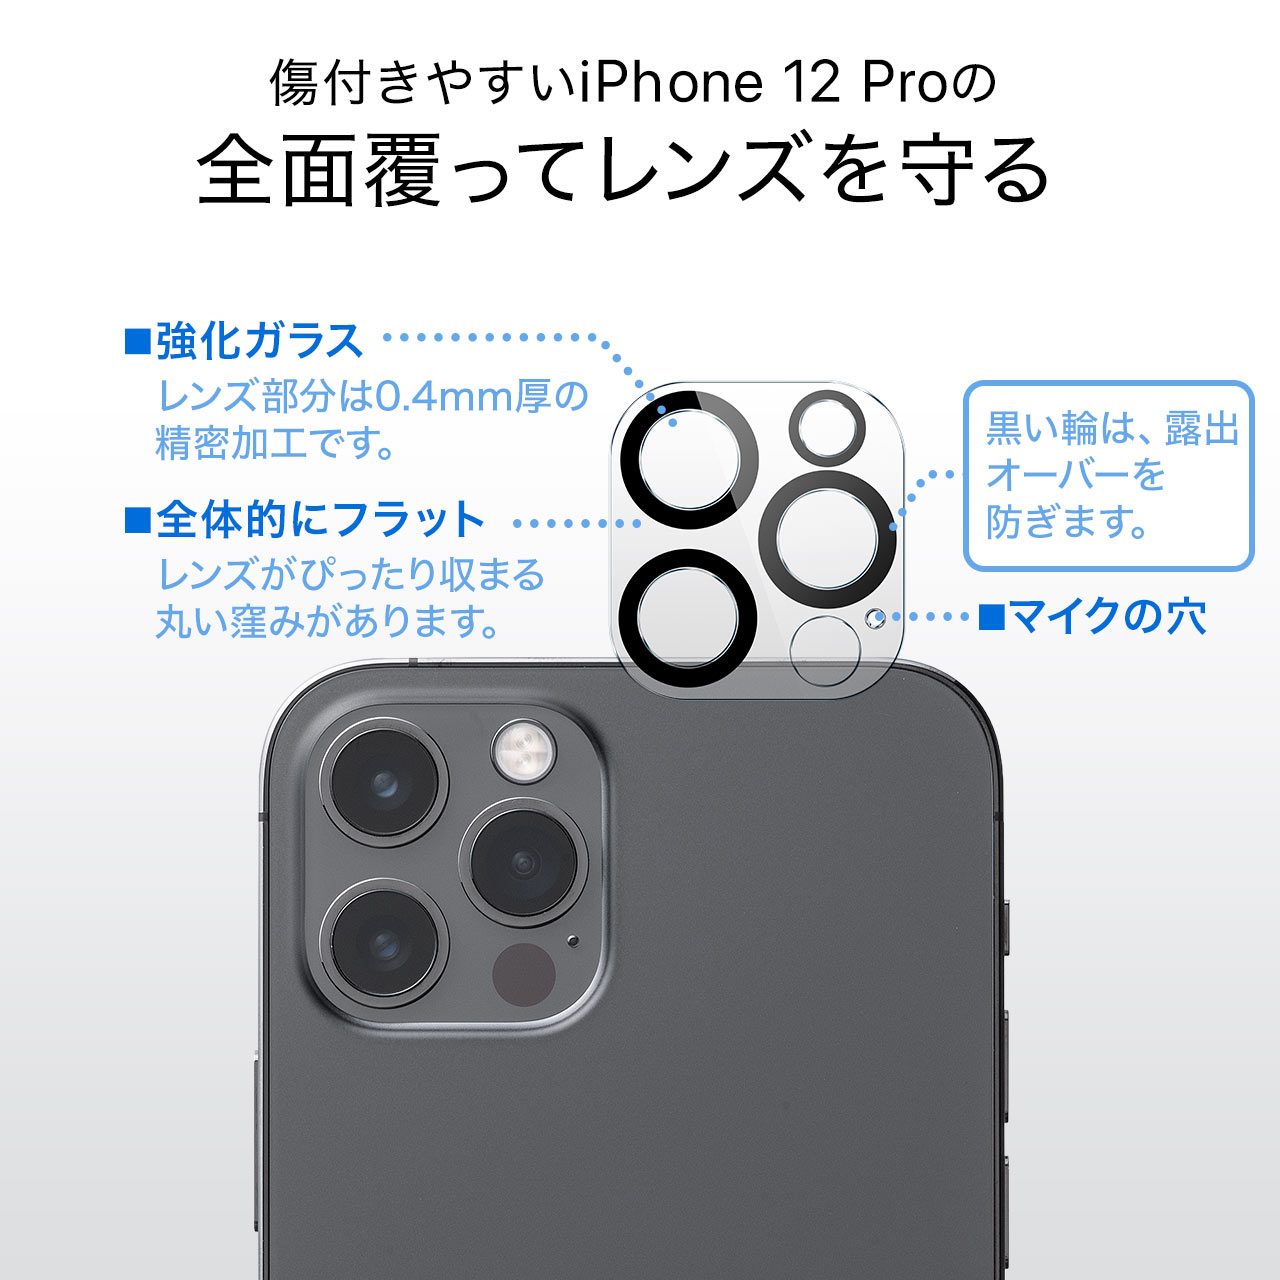 iPhone12PropJYی십KXtB(dx9HE񖇓j 200-LCD066